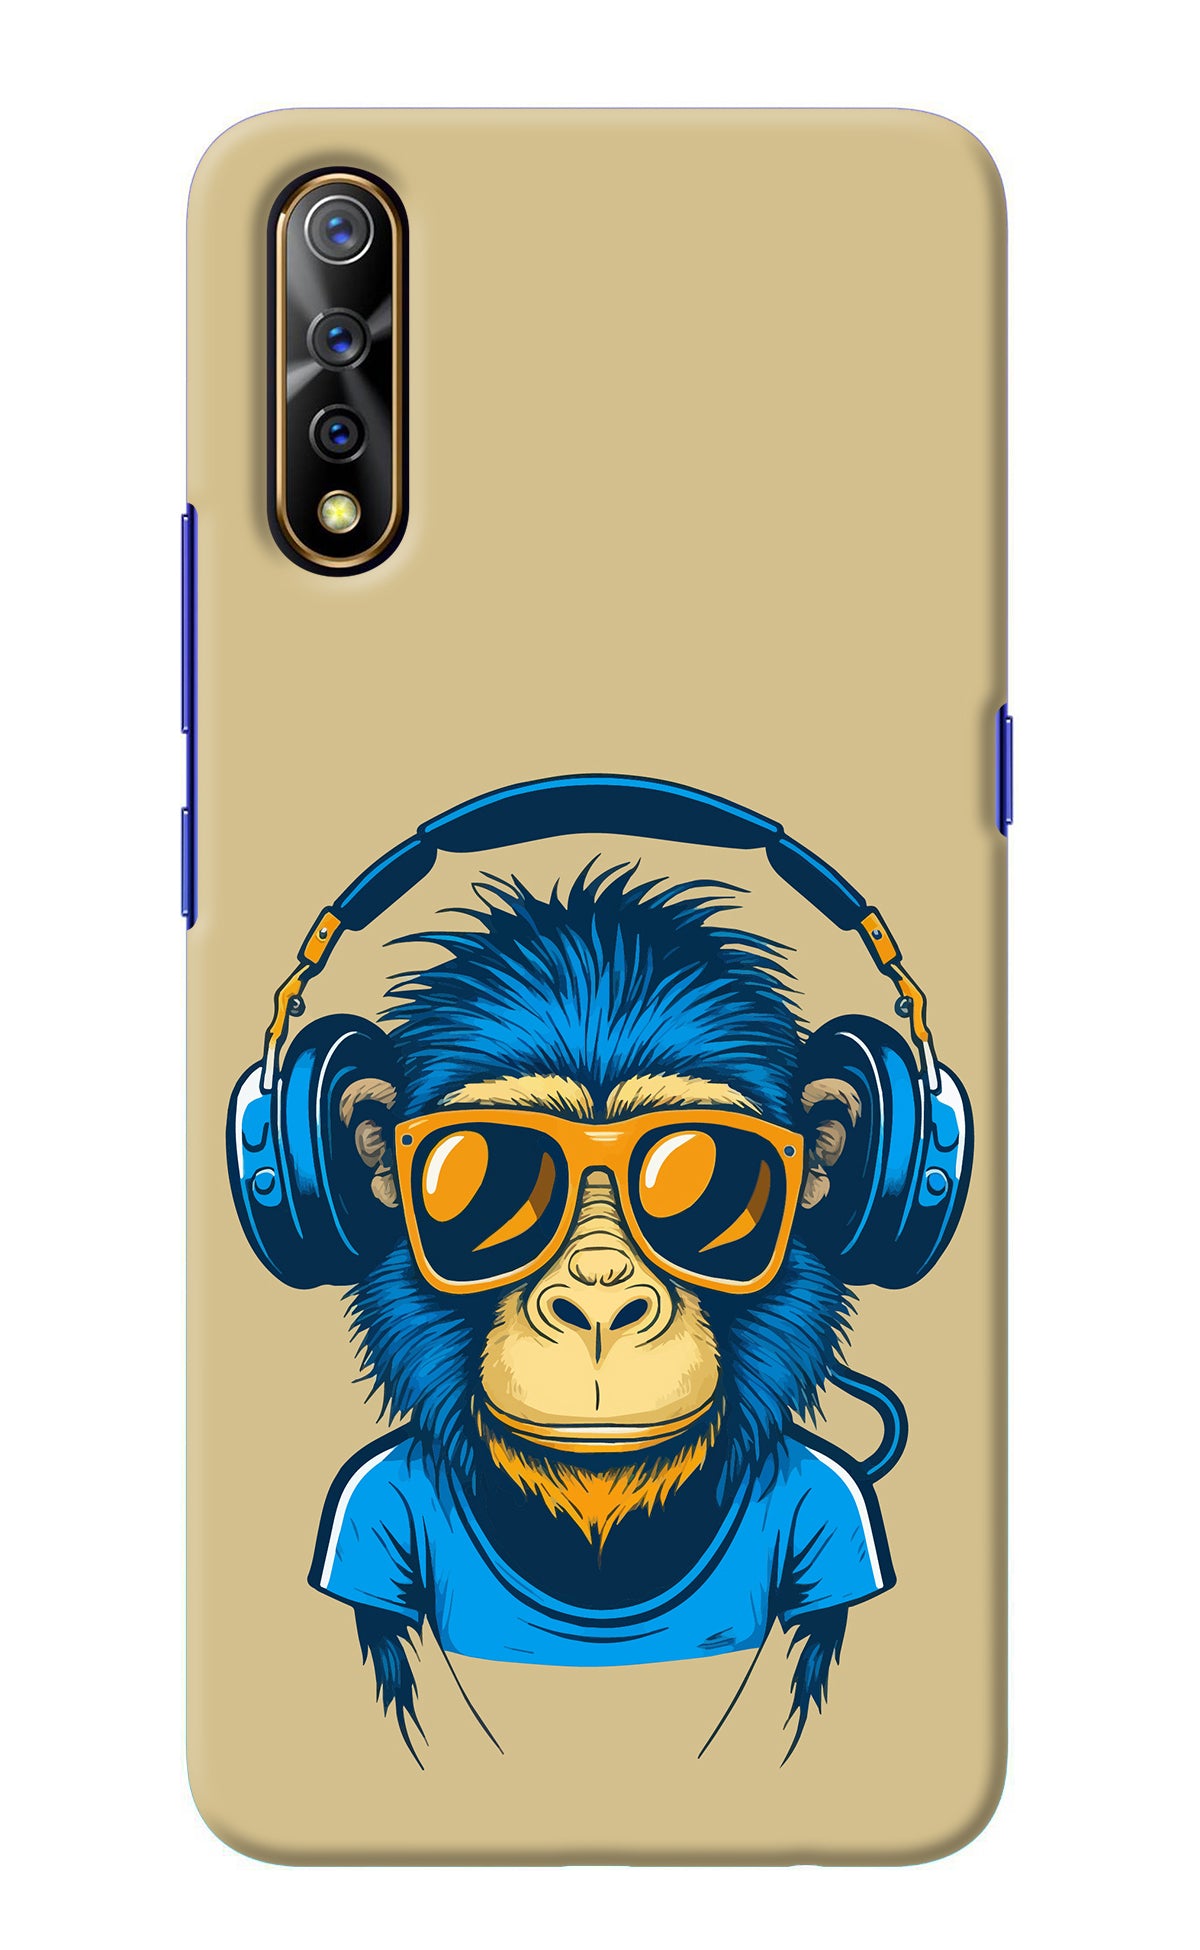 Monkey Headphone Vivo S1/Z1x Back Cover